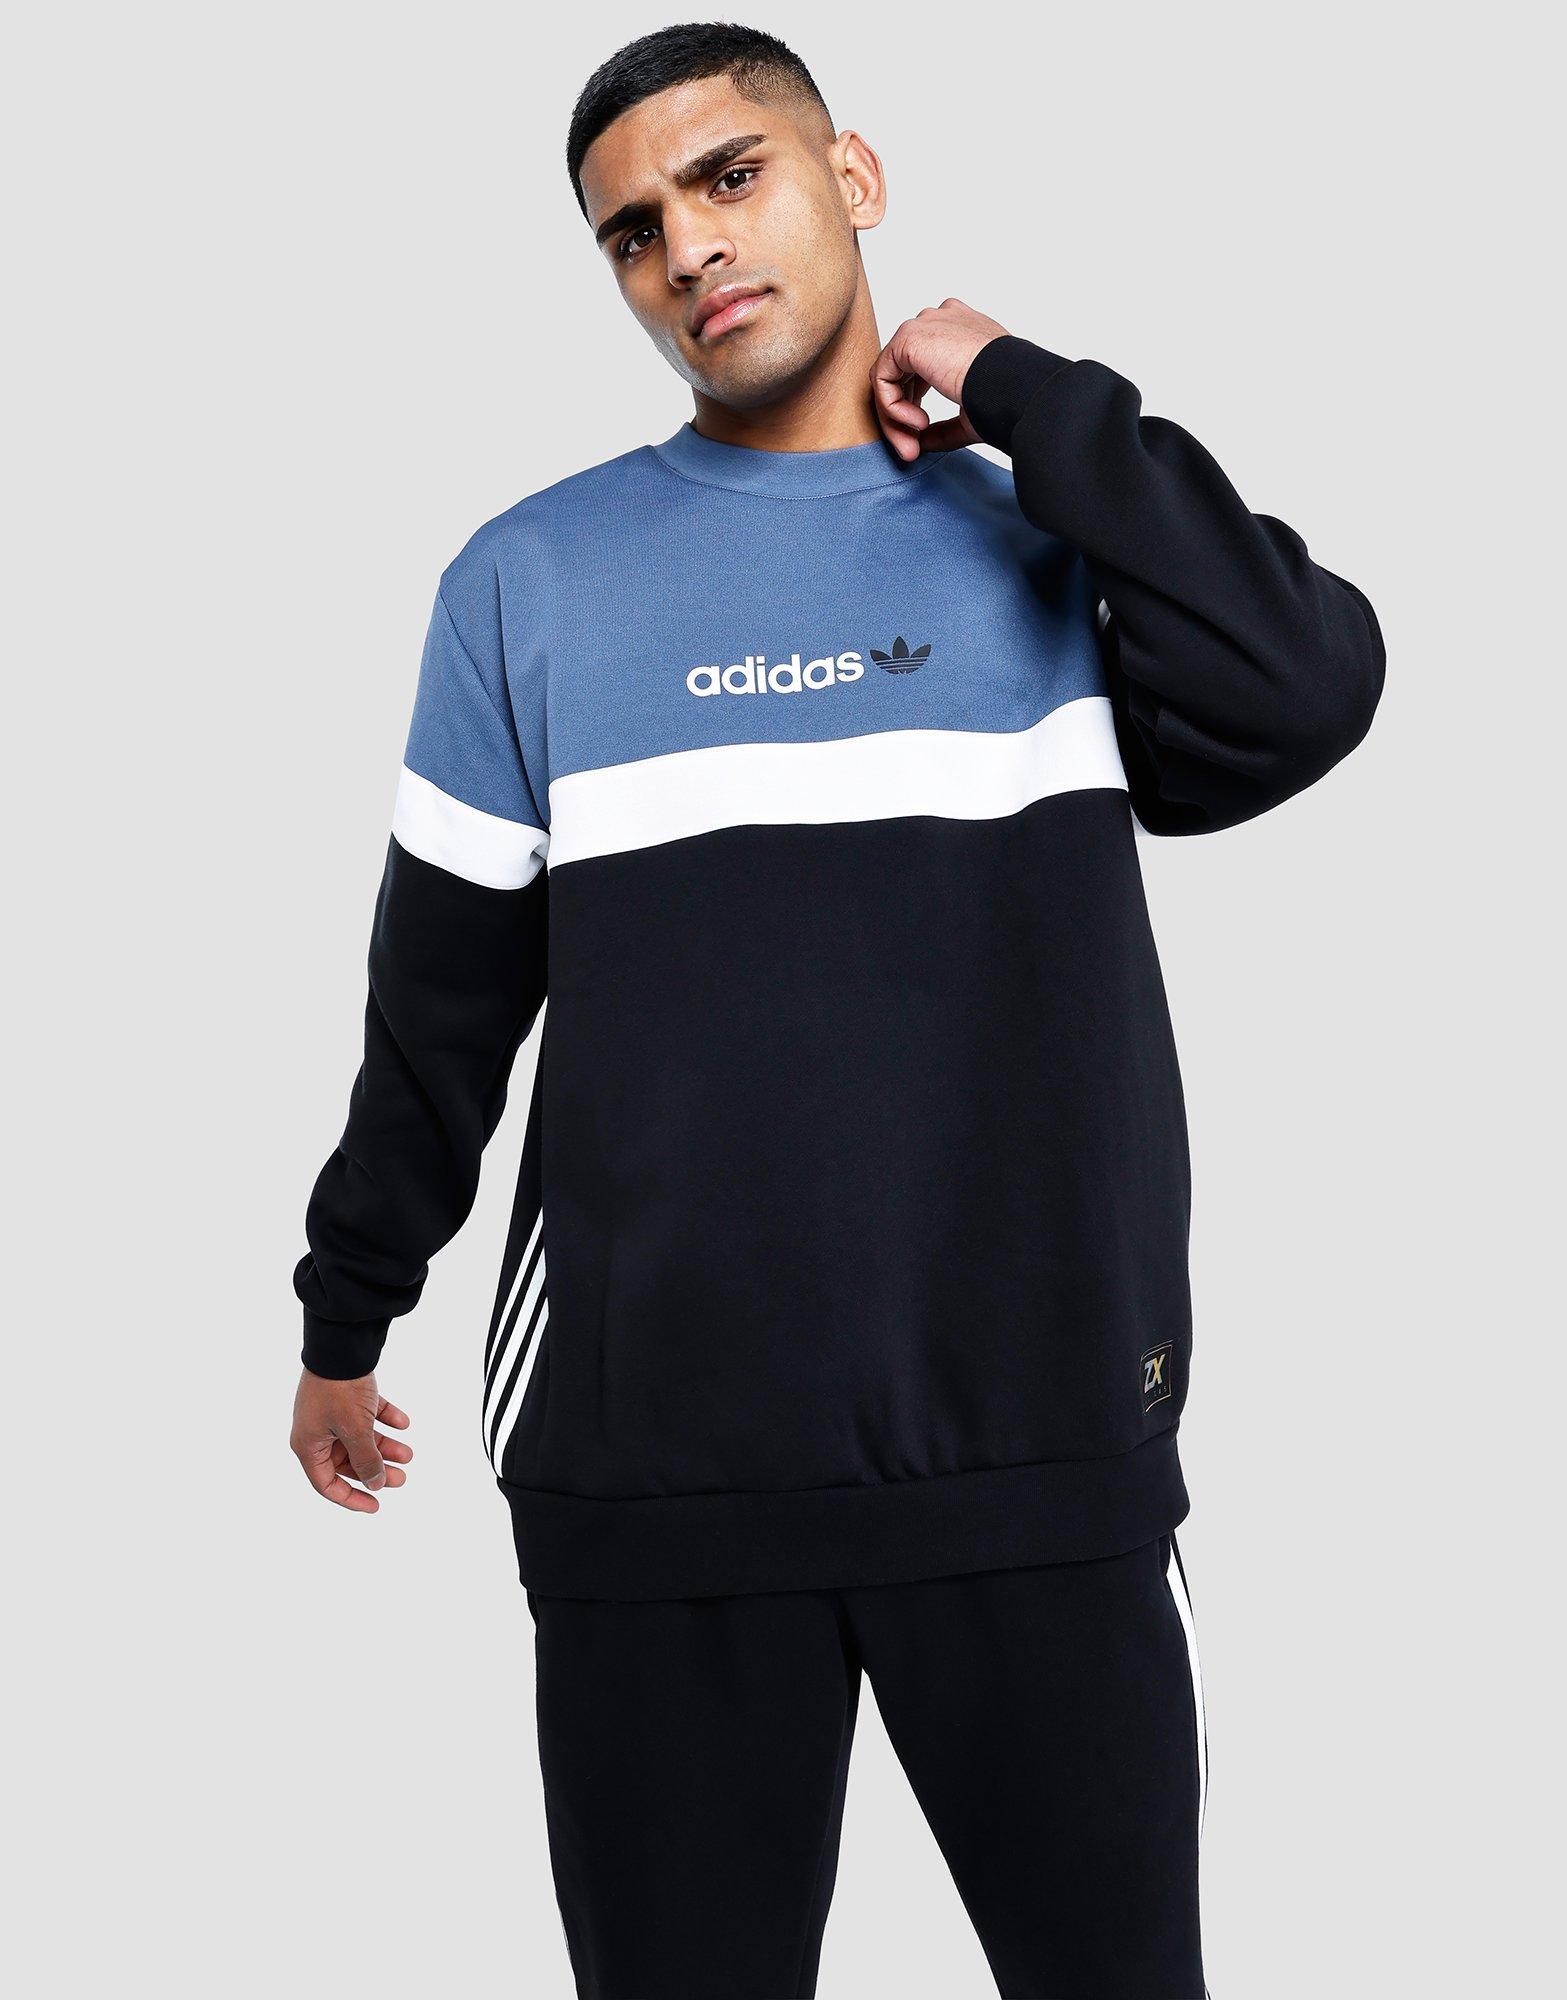 Adidas Originals Zx Sweatshirt Flash Sales, SAVE 49% - aveclumiere.com